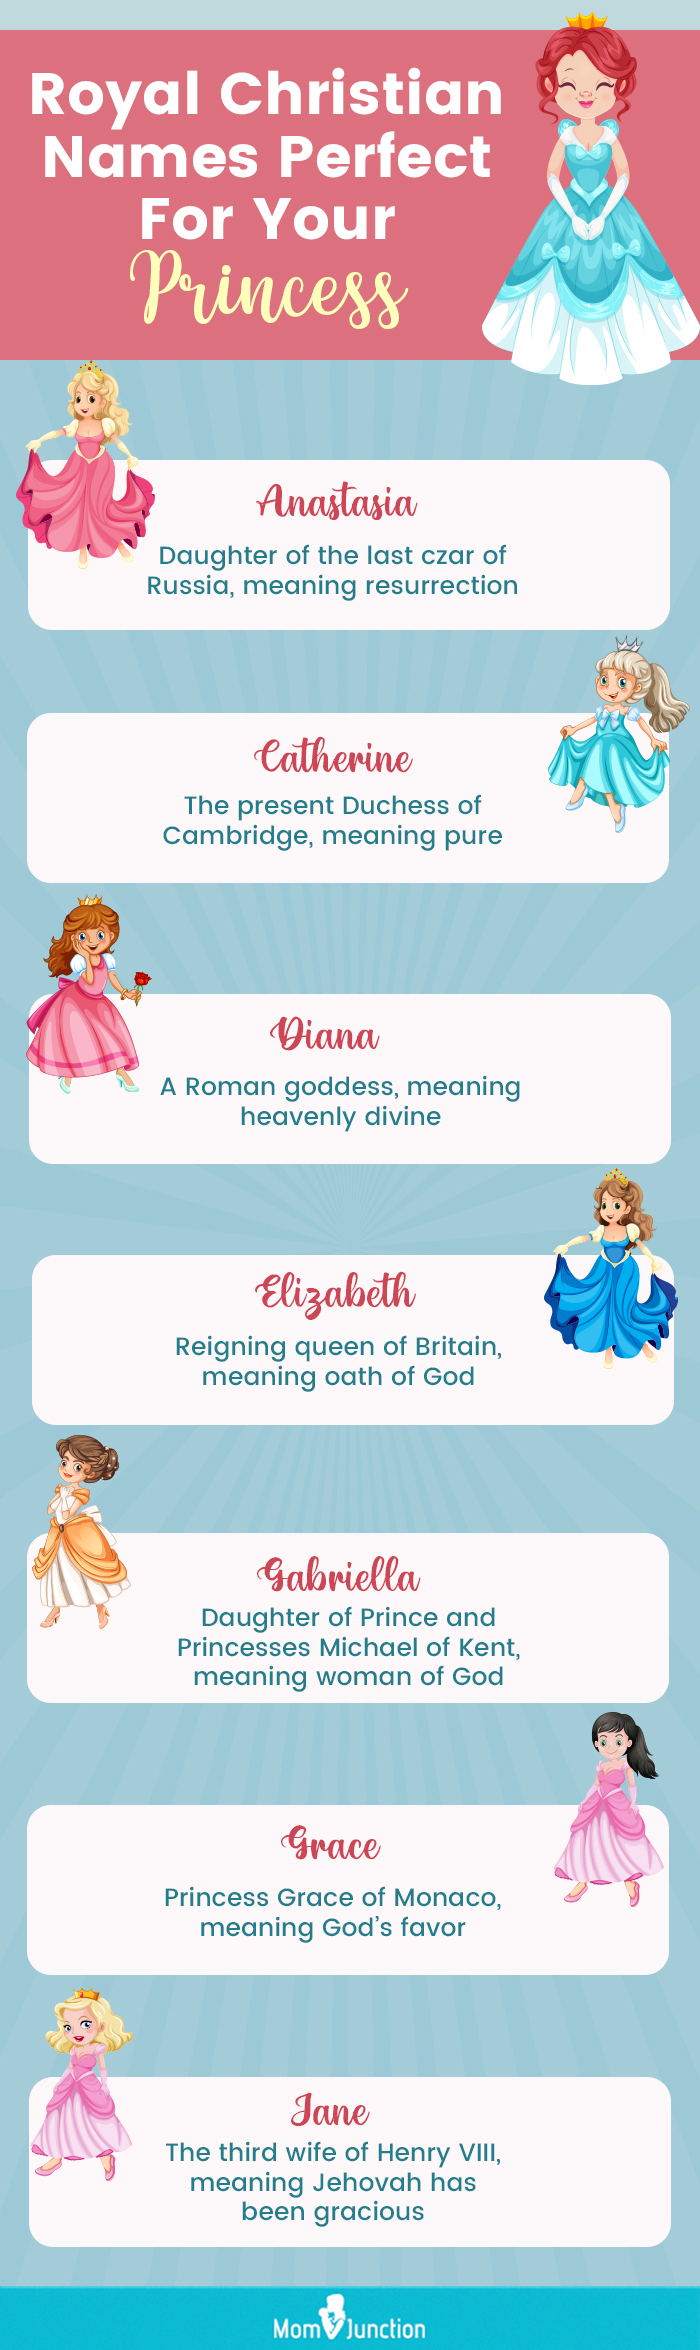 royal christian names perfect for your princess (infographic)